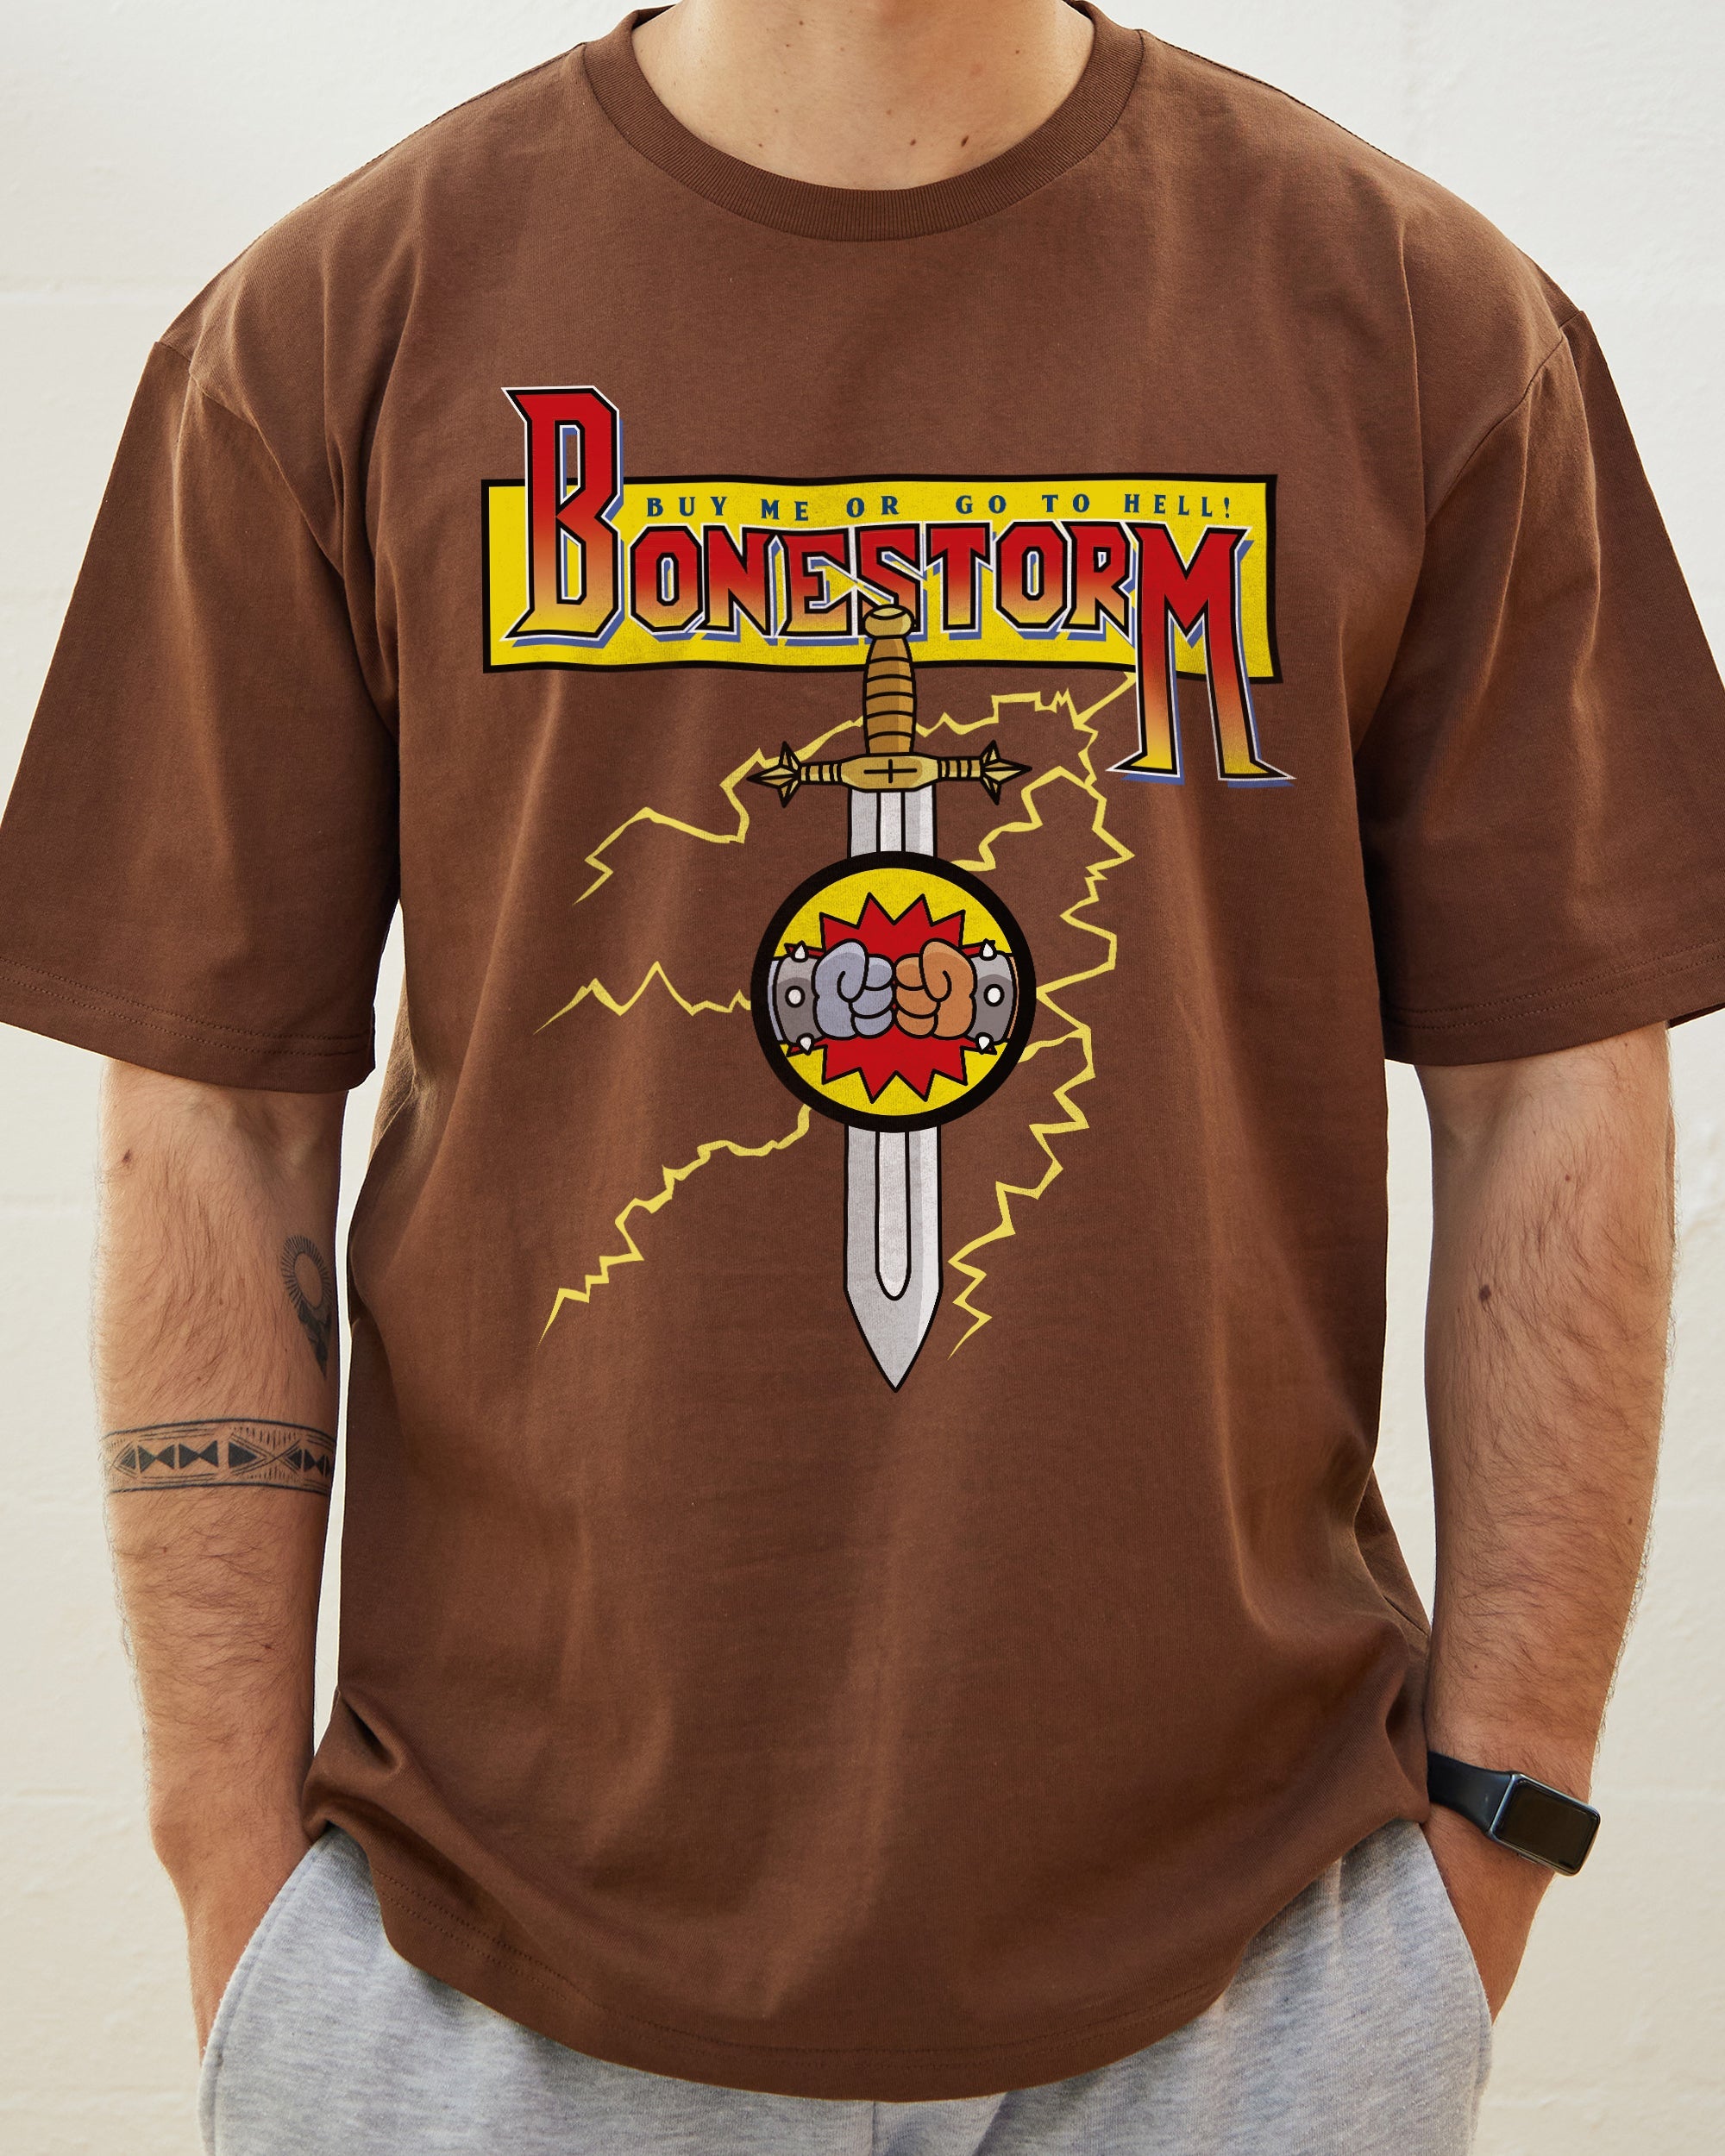 Bonestorm T-Shirt Australia Online Brown